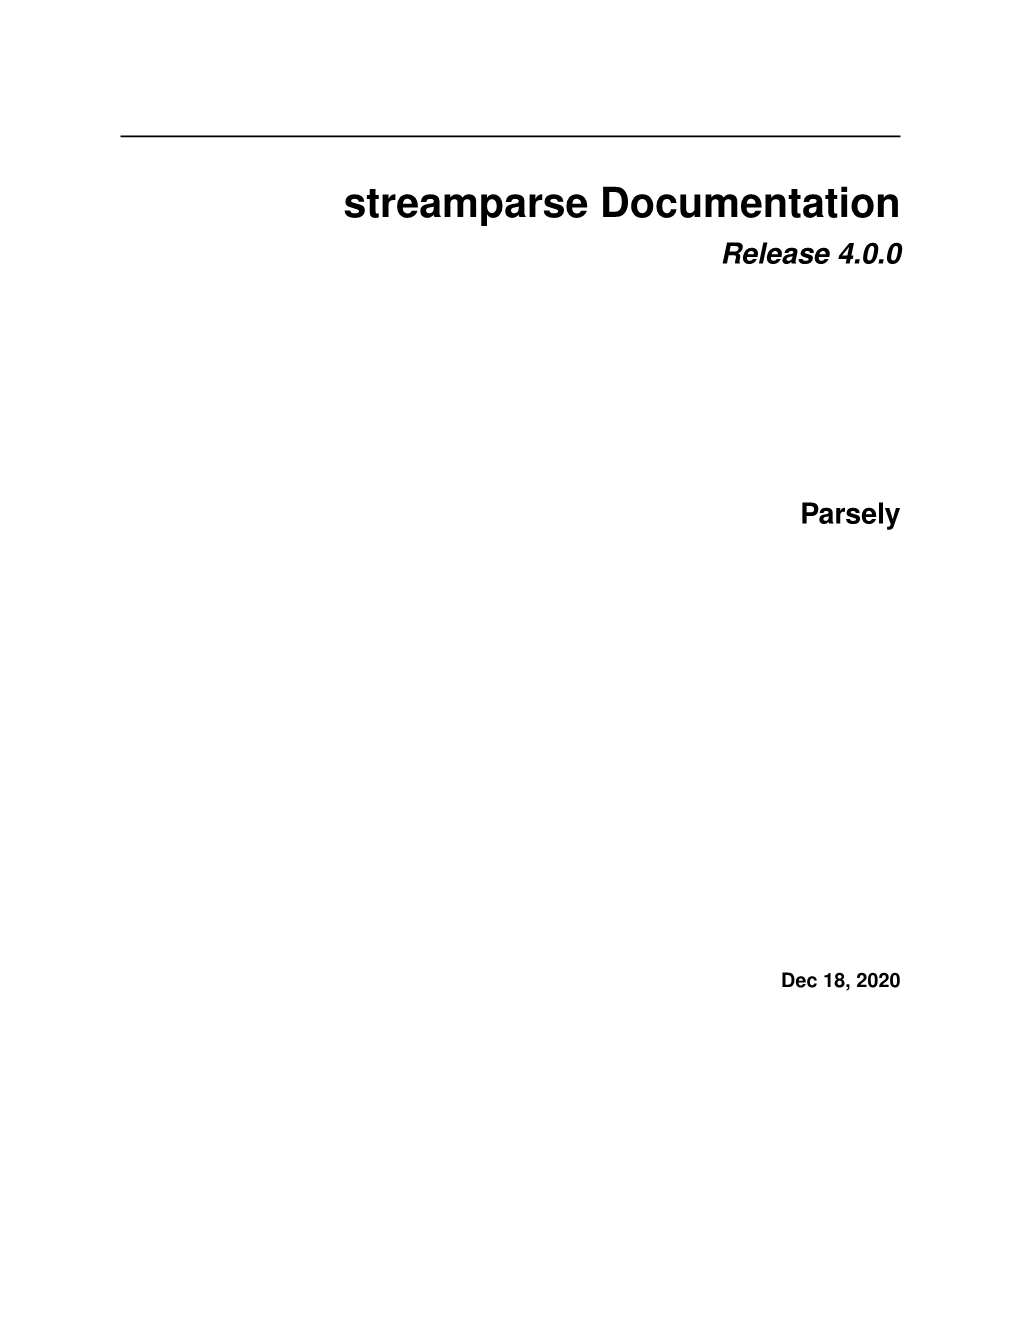 Streamparse Documentation Release 4.0.0